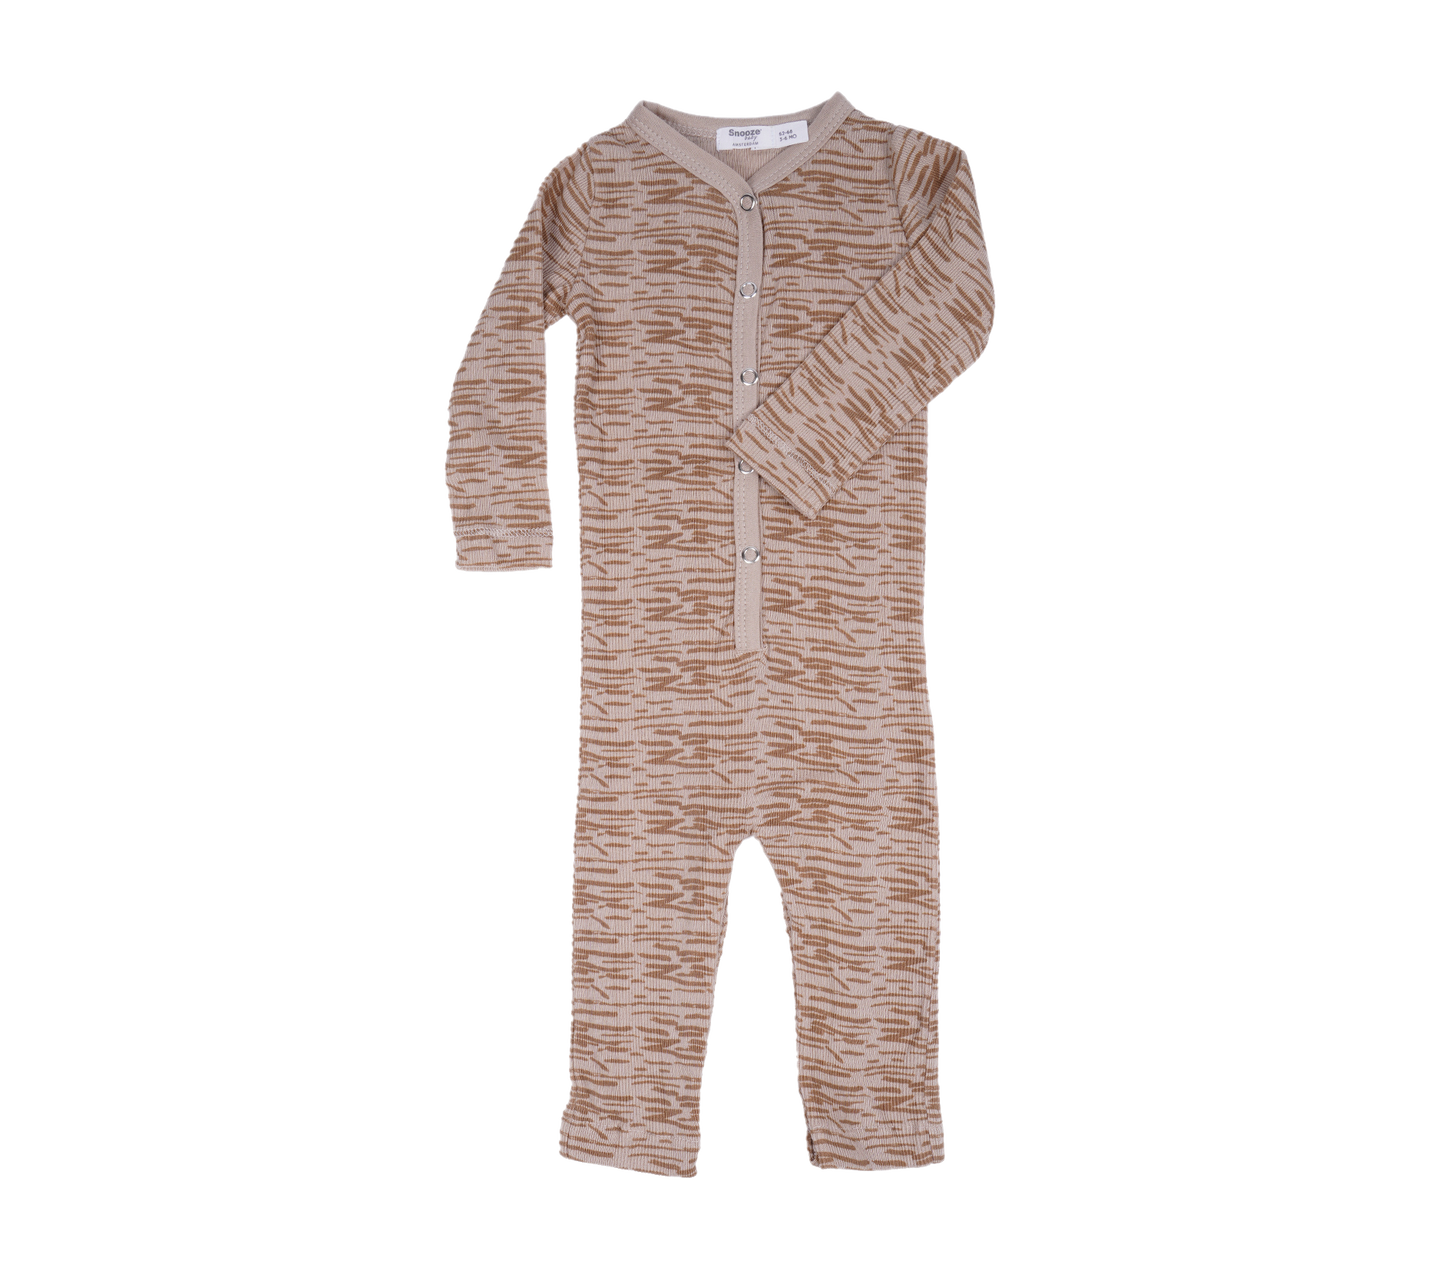 ORGANIC baby suit Desert Sand print